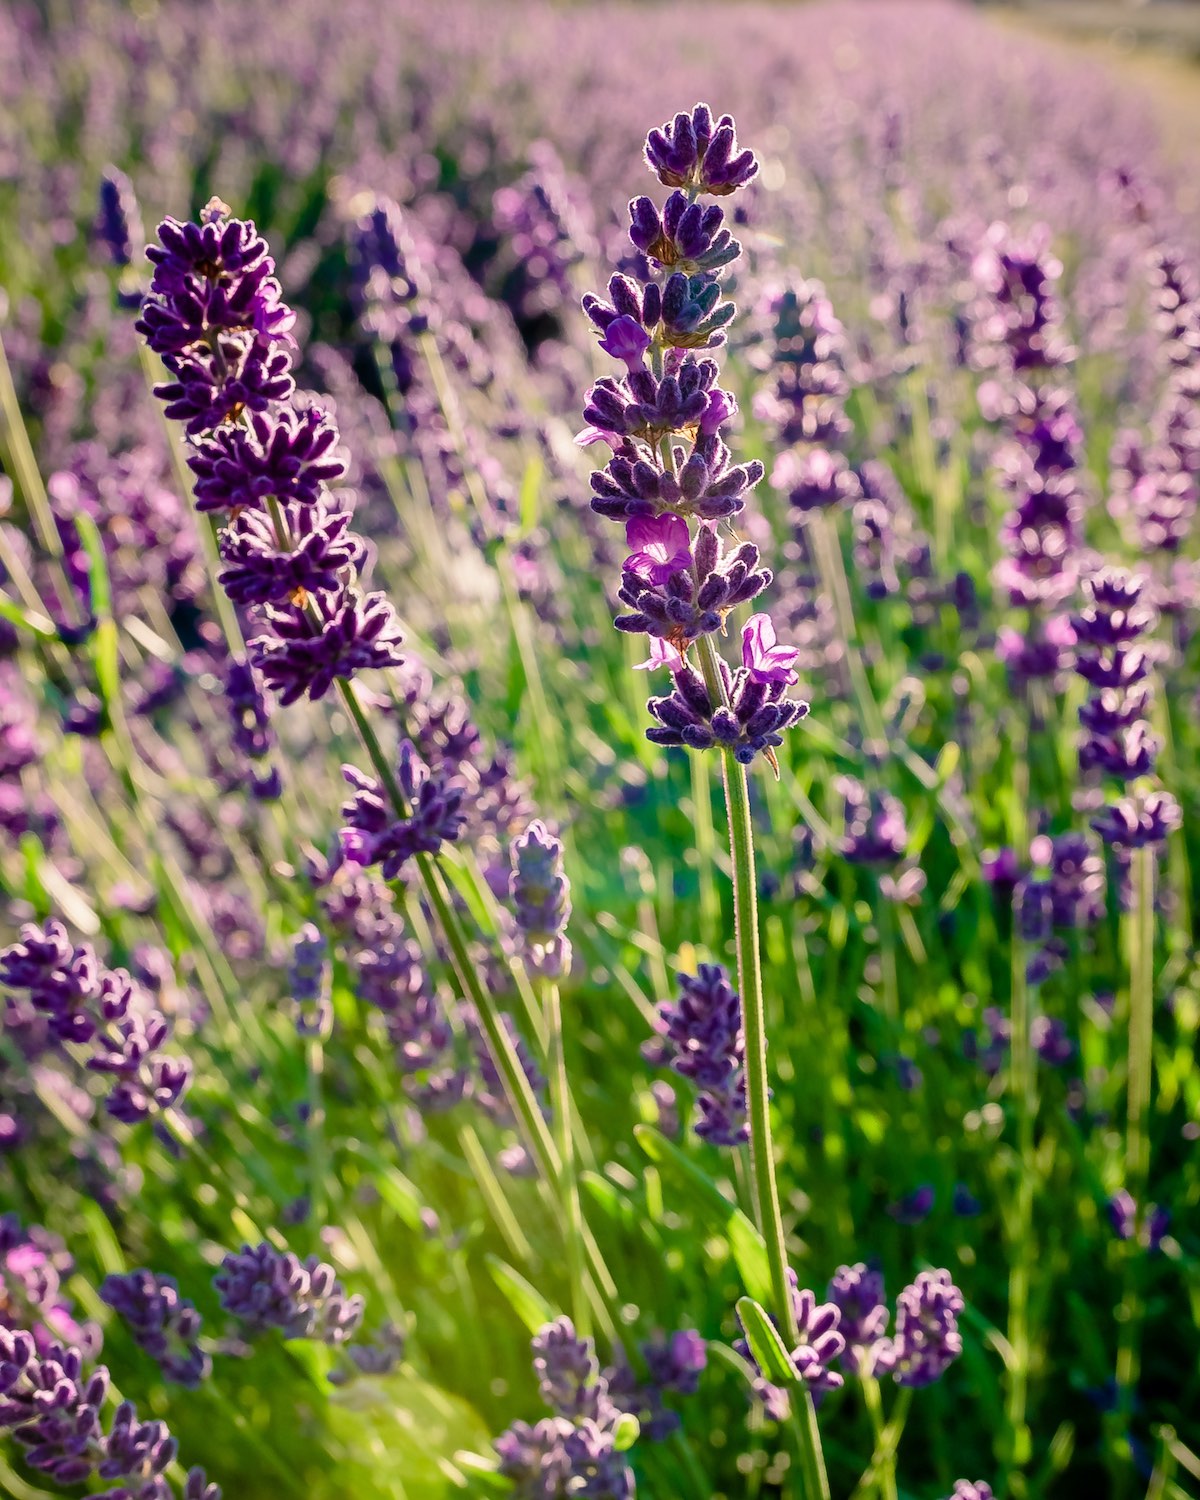 Flowering 'Superblue' Dutch lavender in field